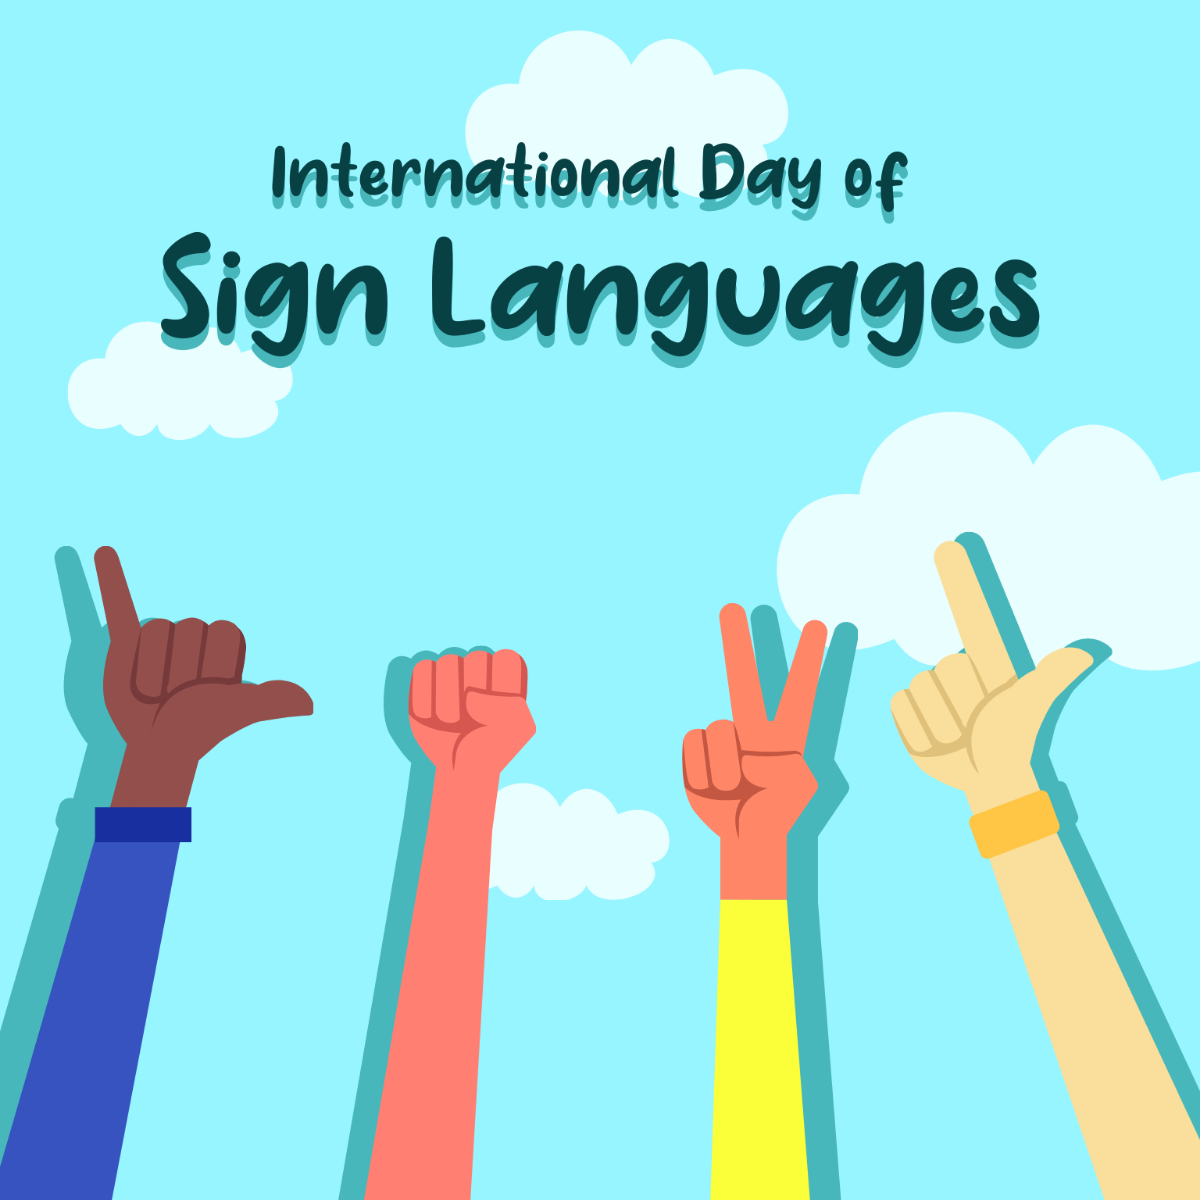 Happy International Day of Sign Languages Illustration